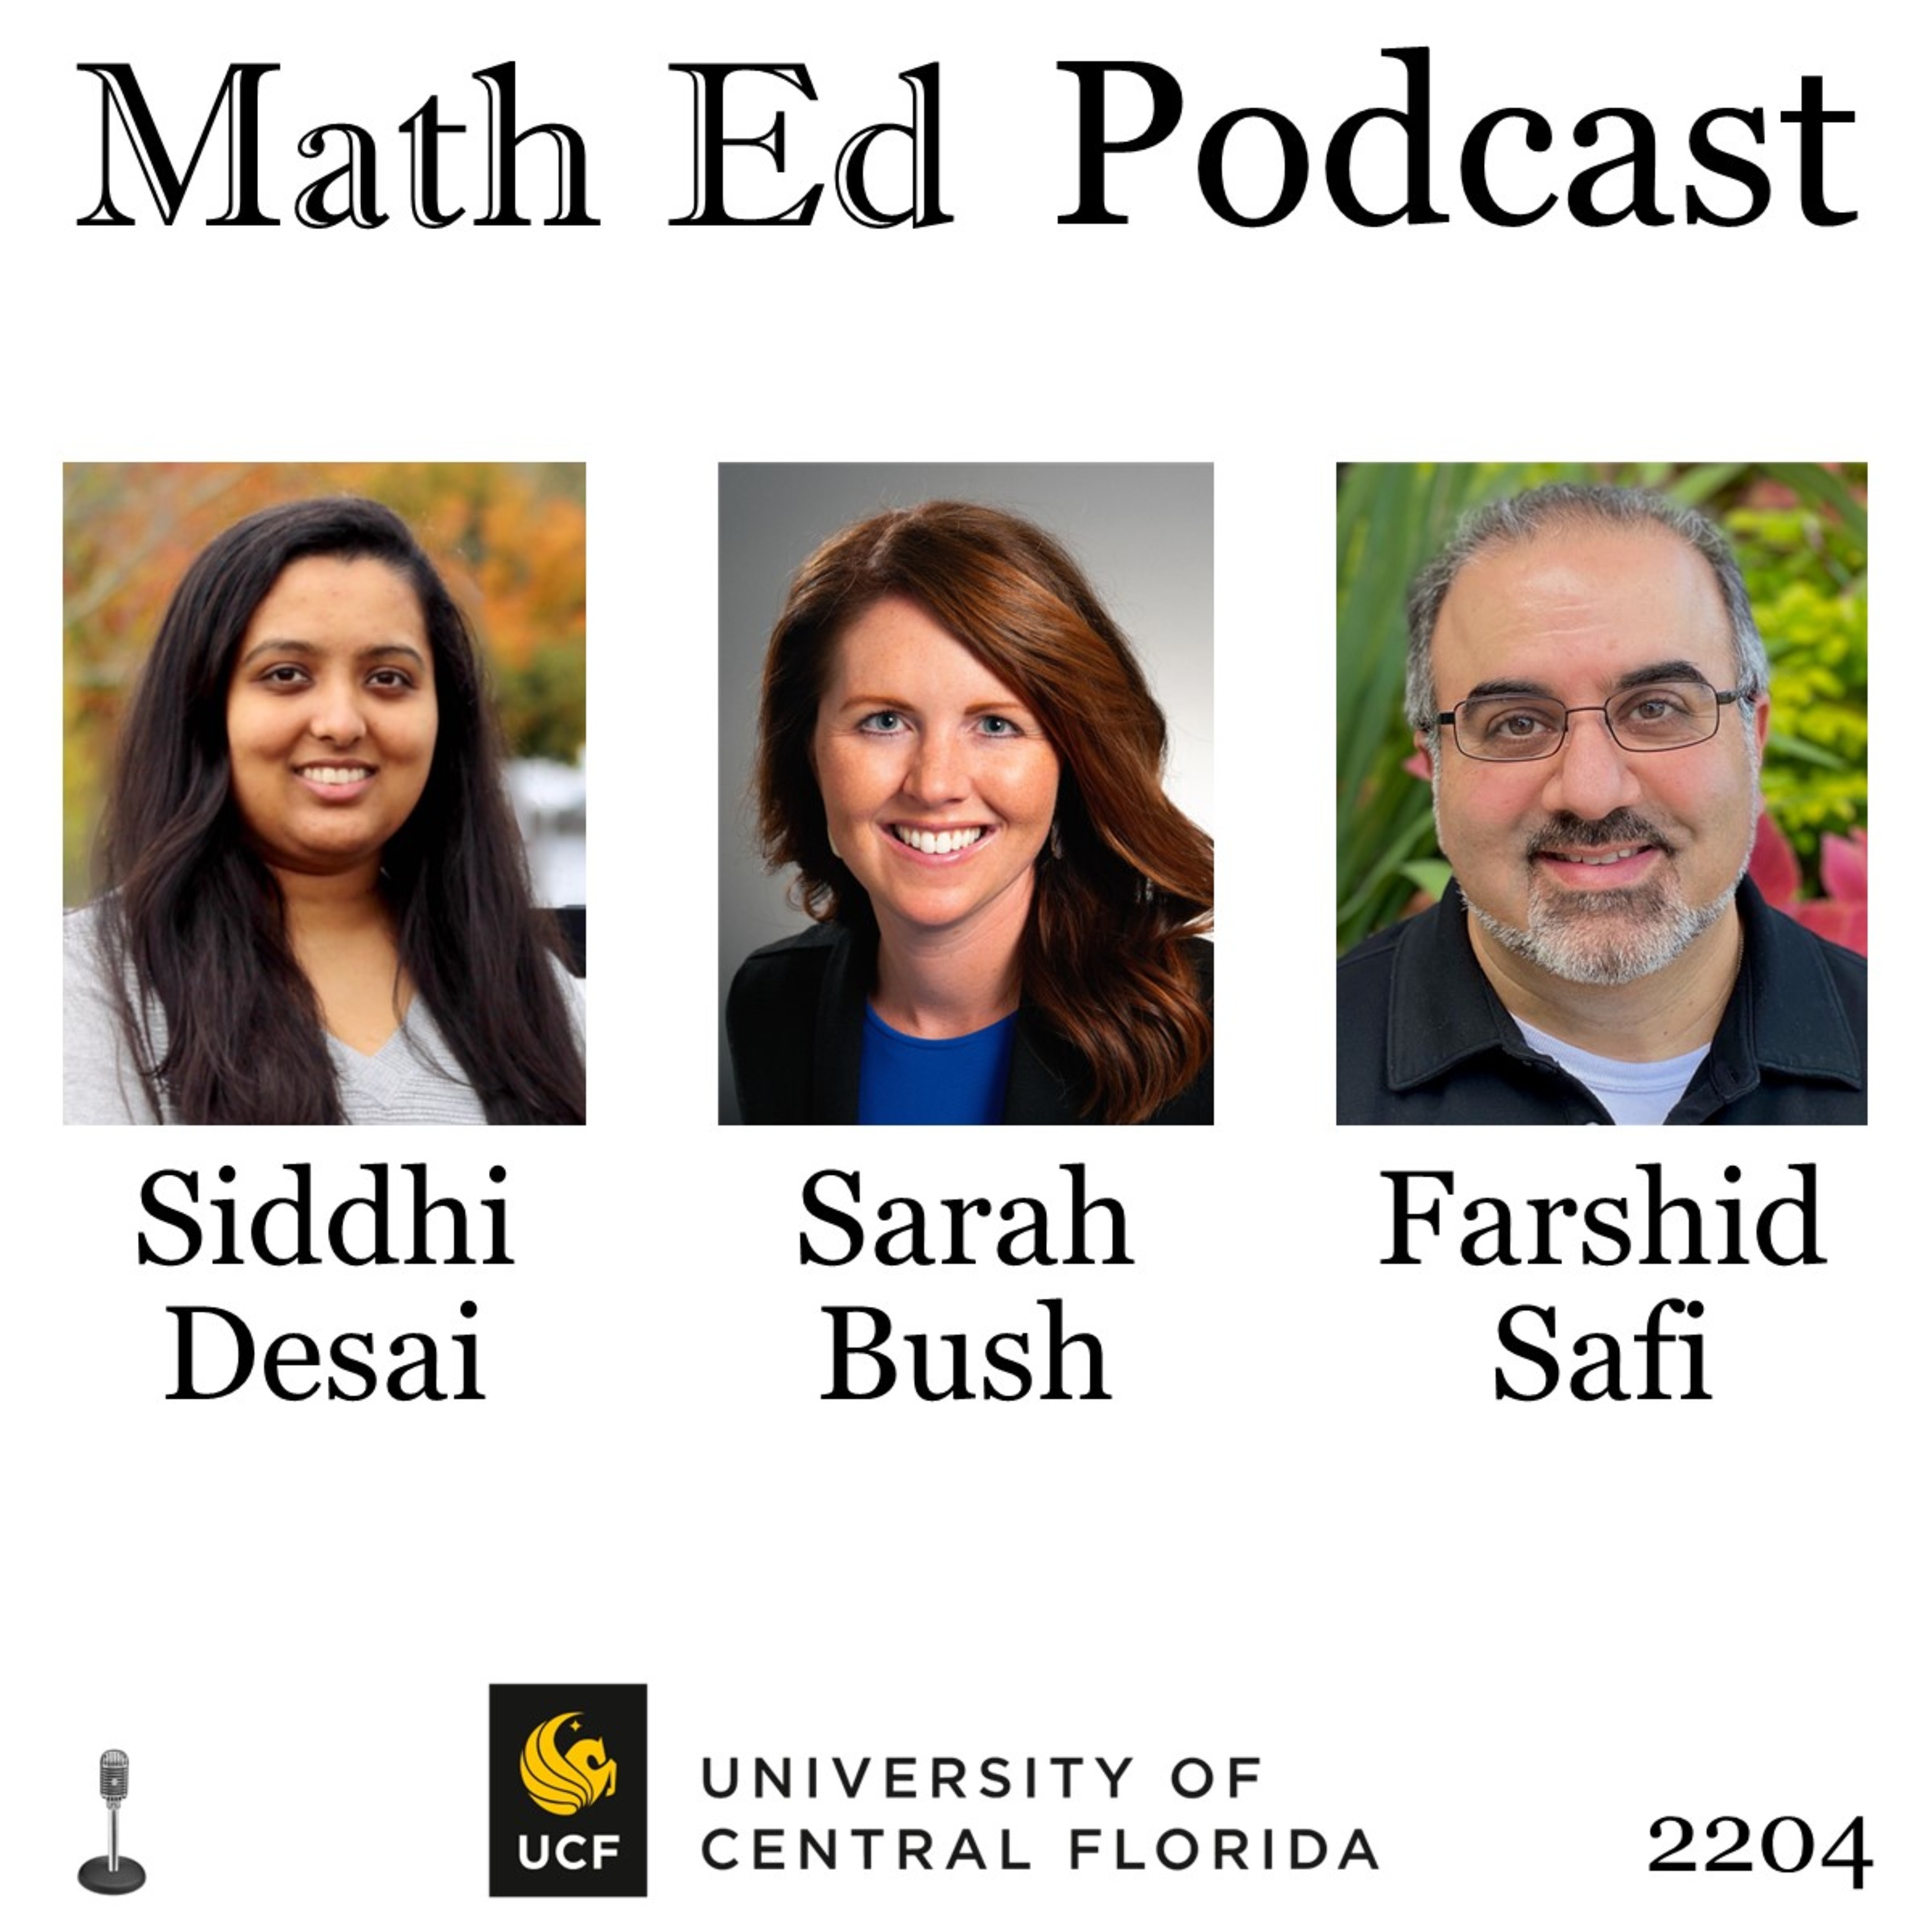 Episode 2204: 2204: Siddhi Desai, Sarah Bush, and Farshid Safi